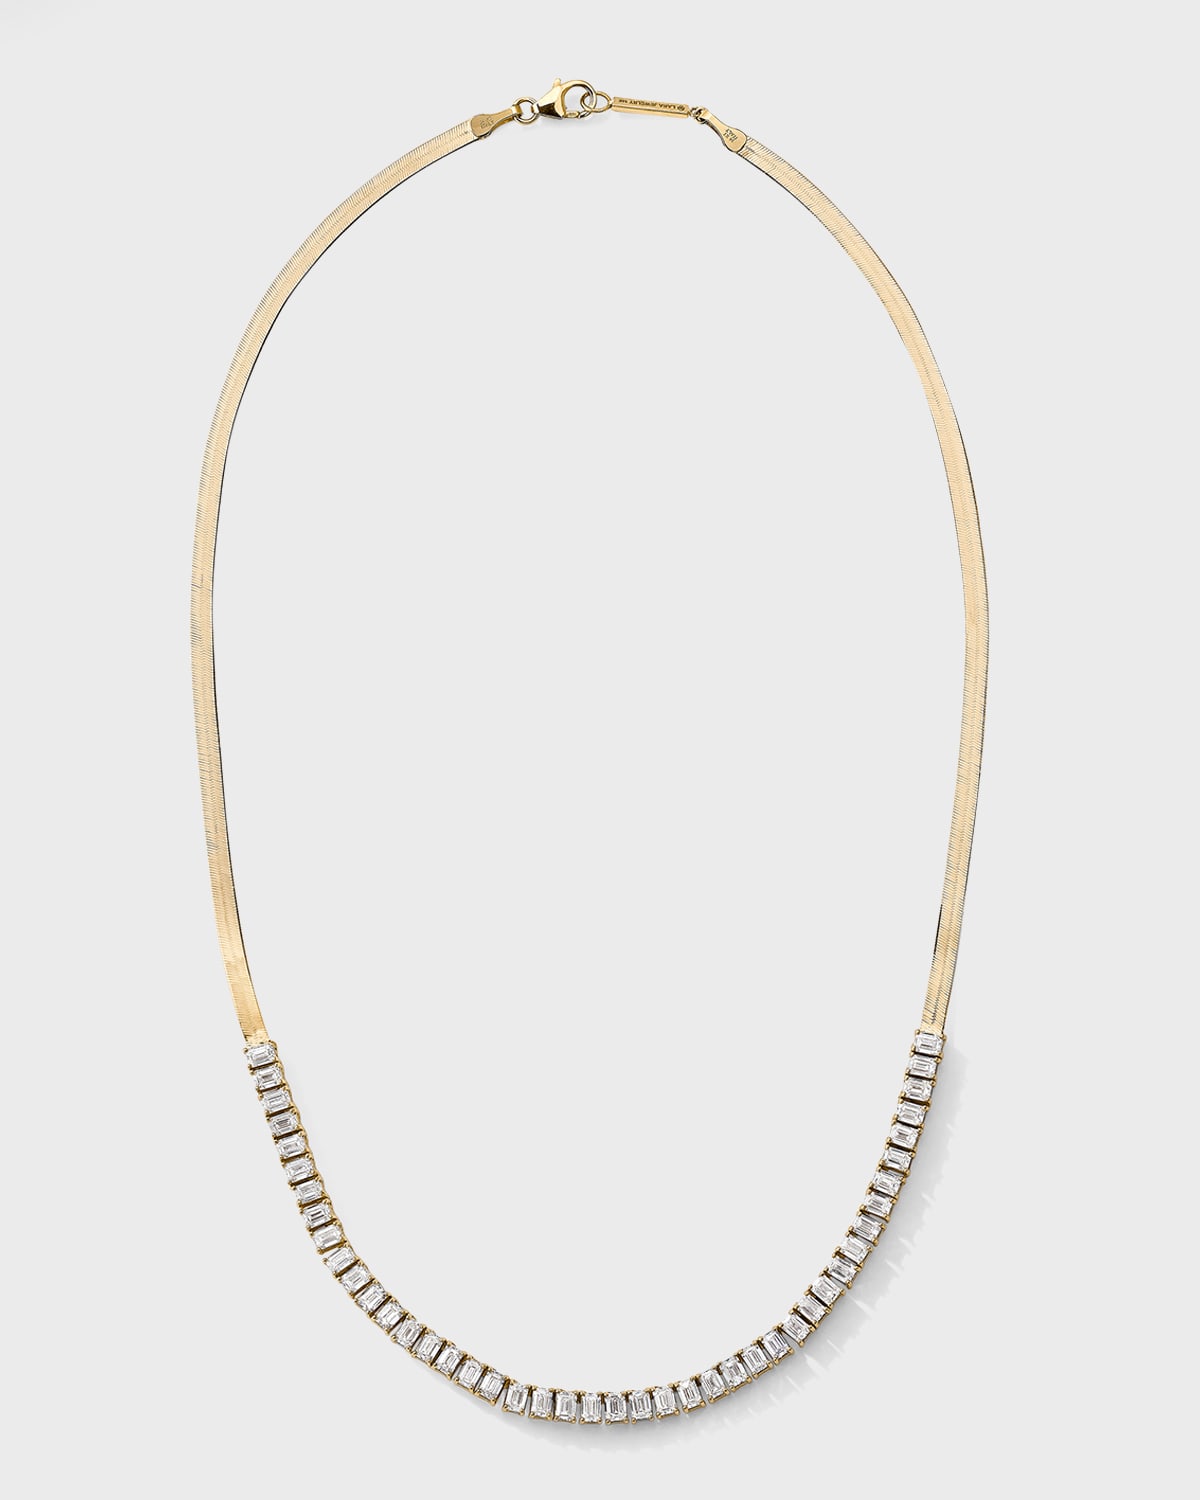 3mm Emerald-Cut Tennis Necklace, 16"L